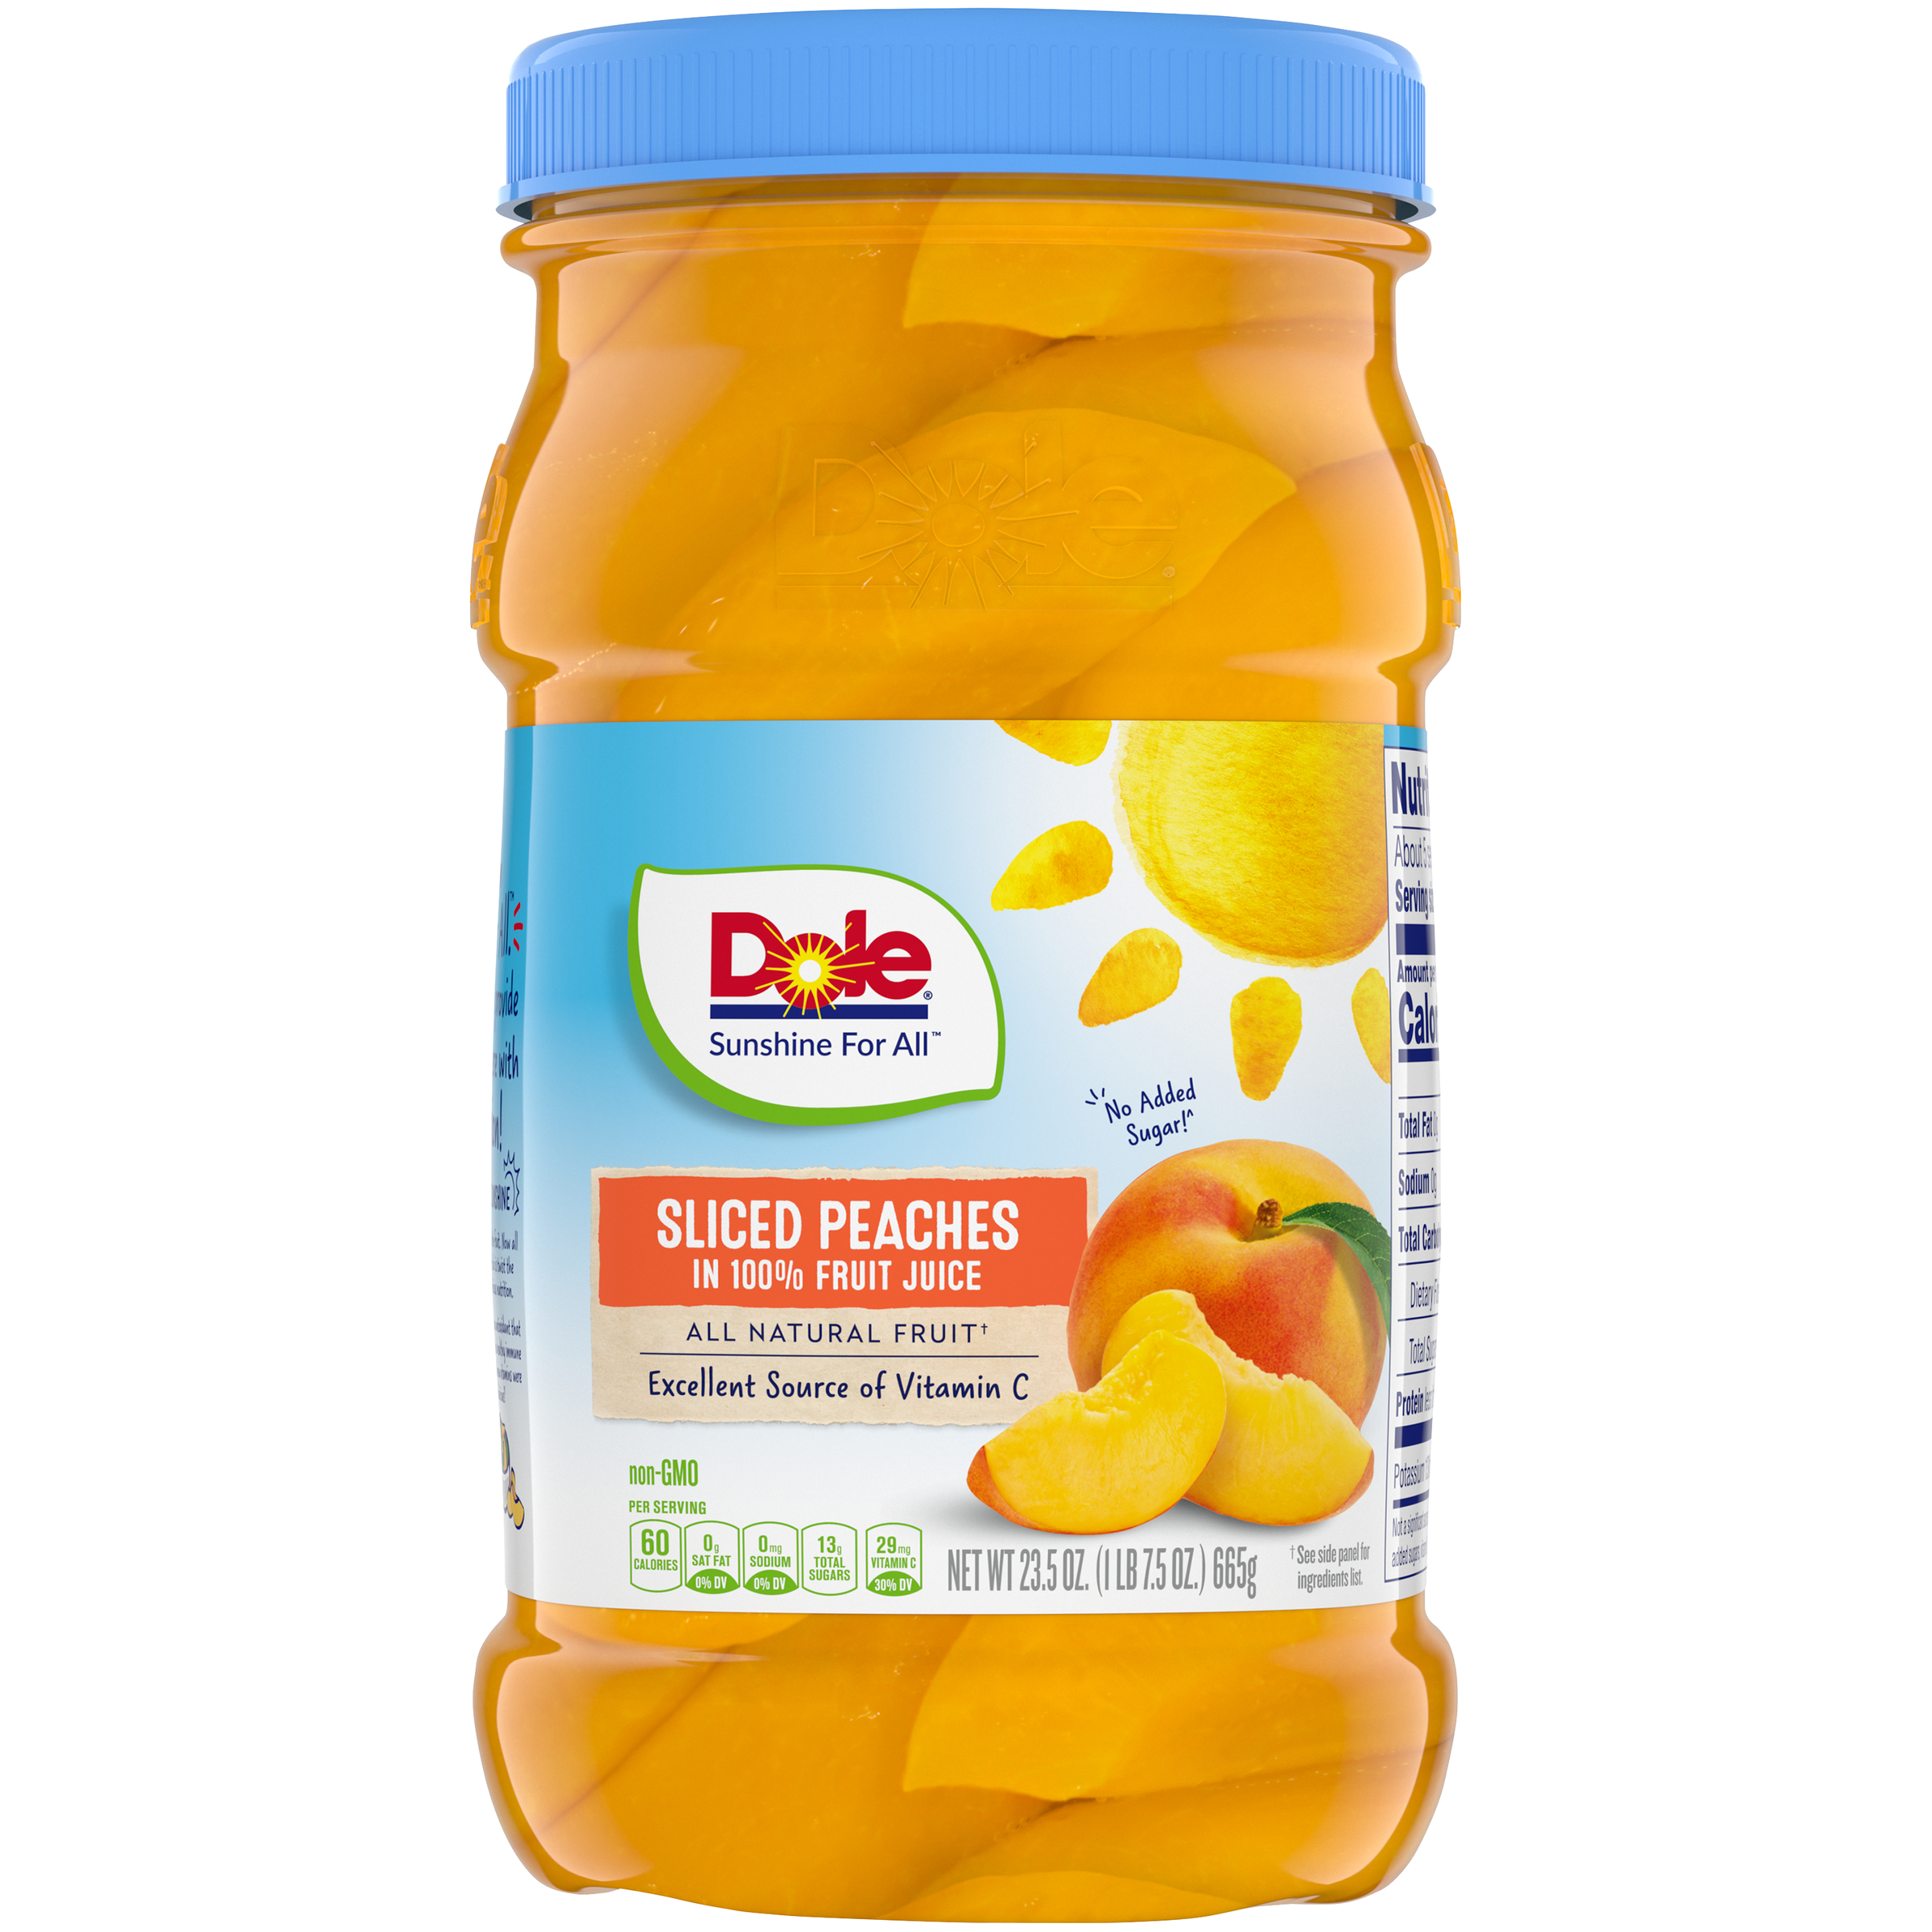 Dole Sliced Peaches in 100% Fruit Juice, 23.5 oz Jar - image 3 of 12